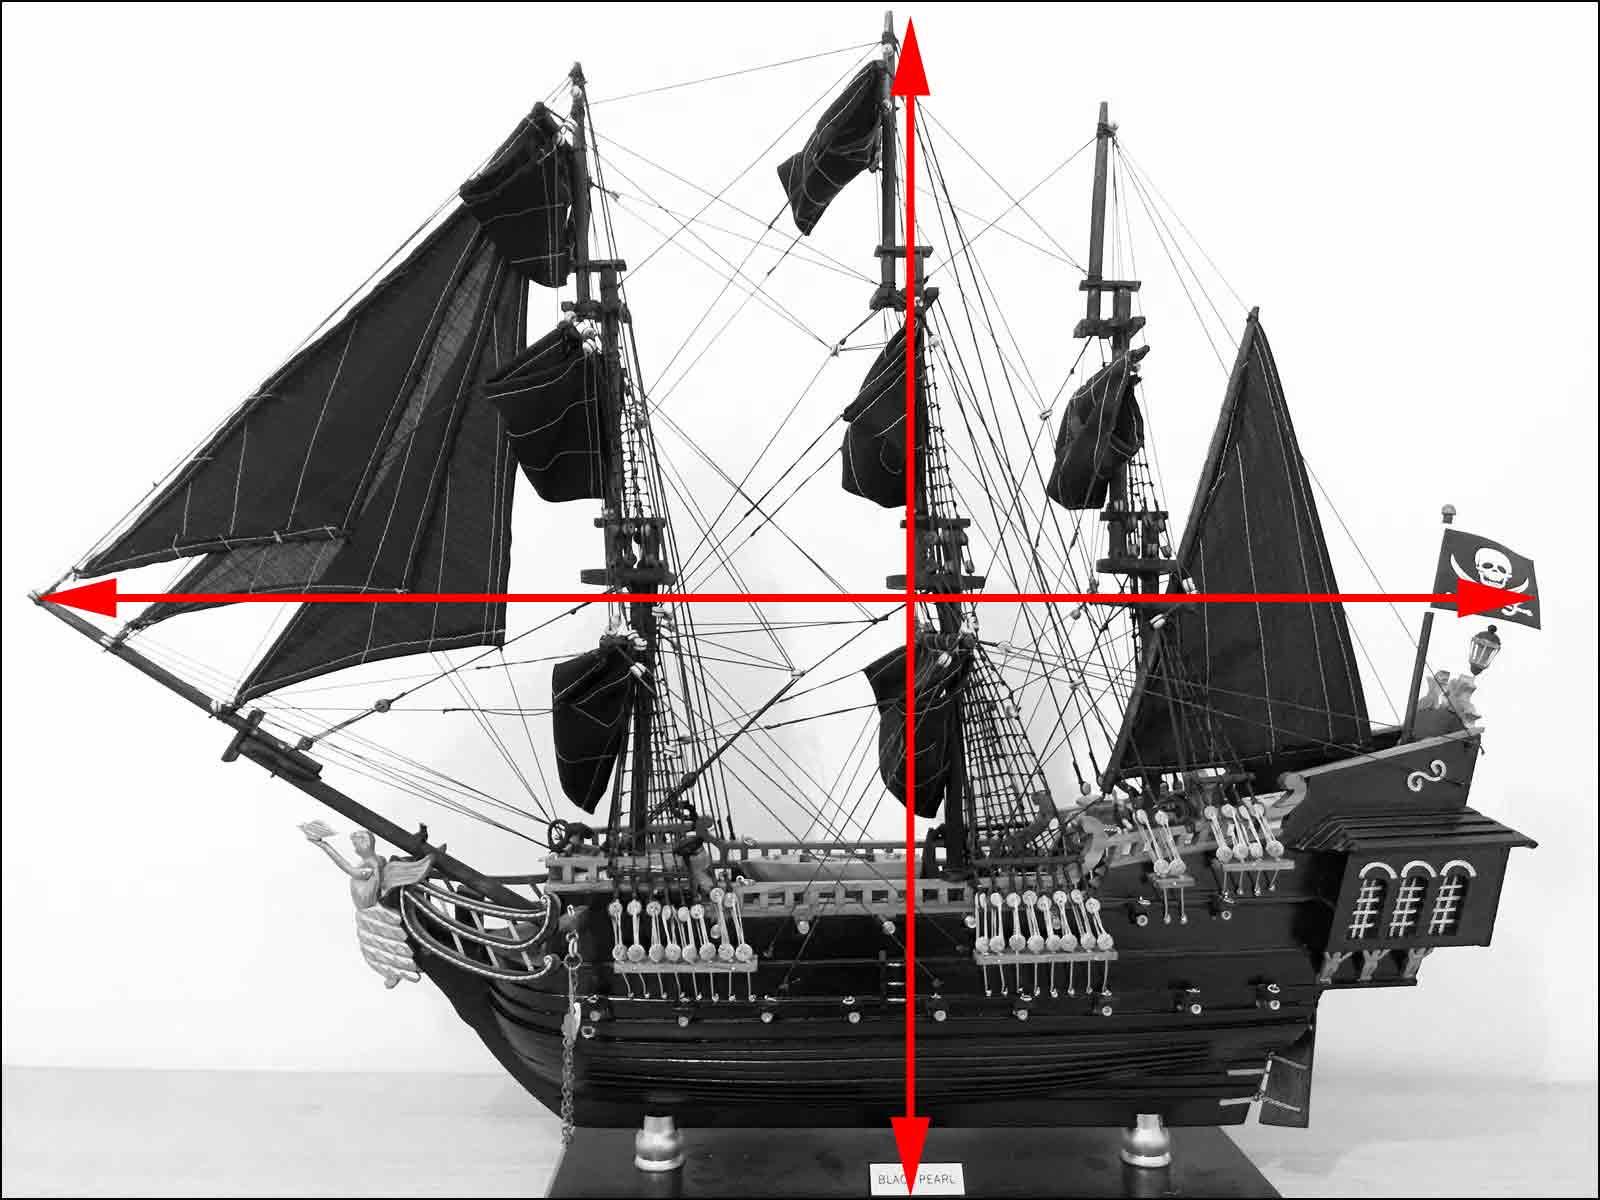 the Black Pearl ship